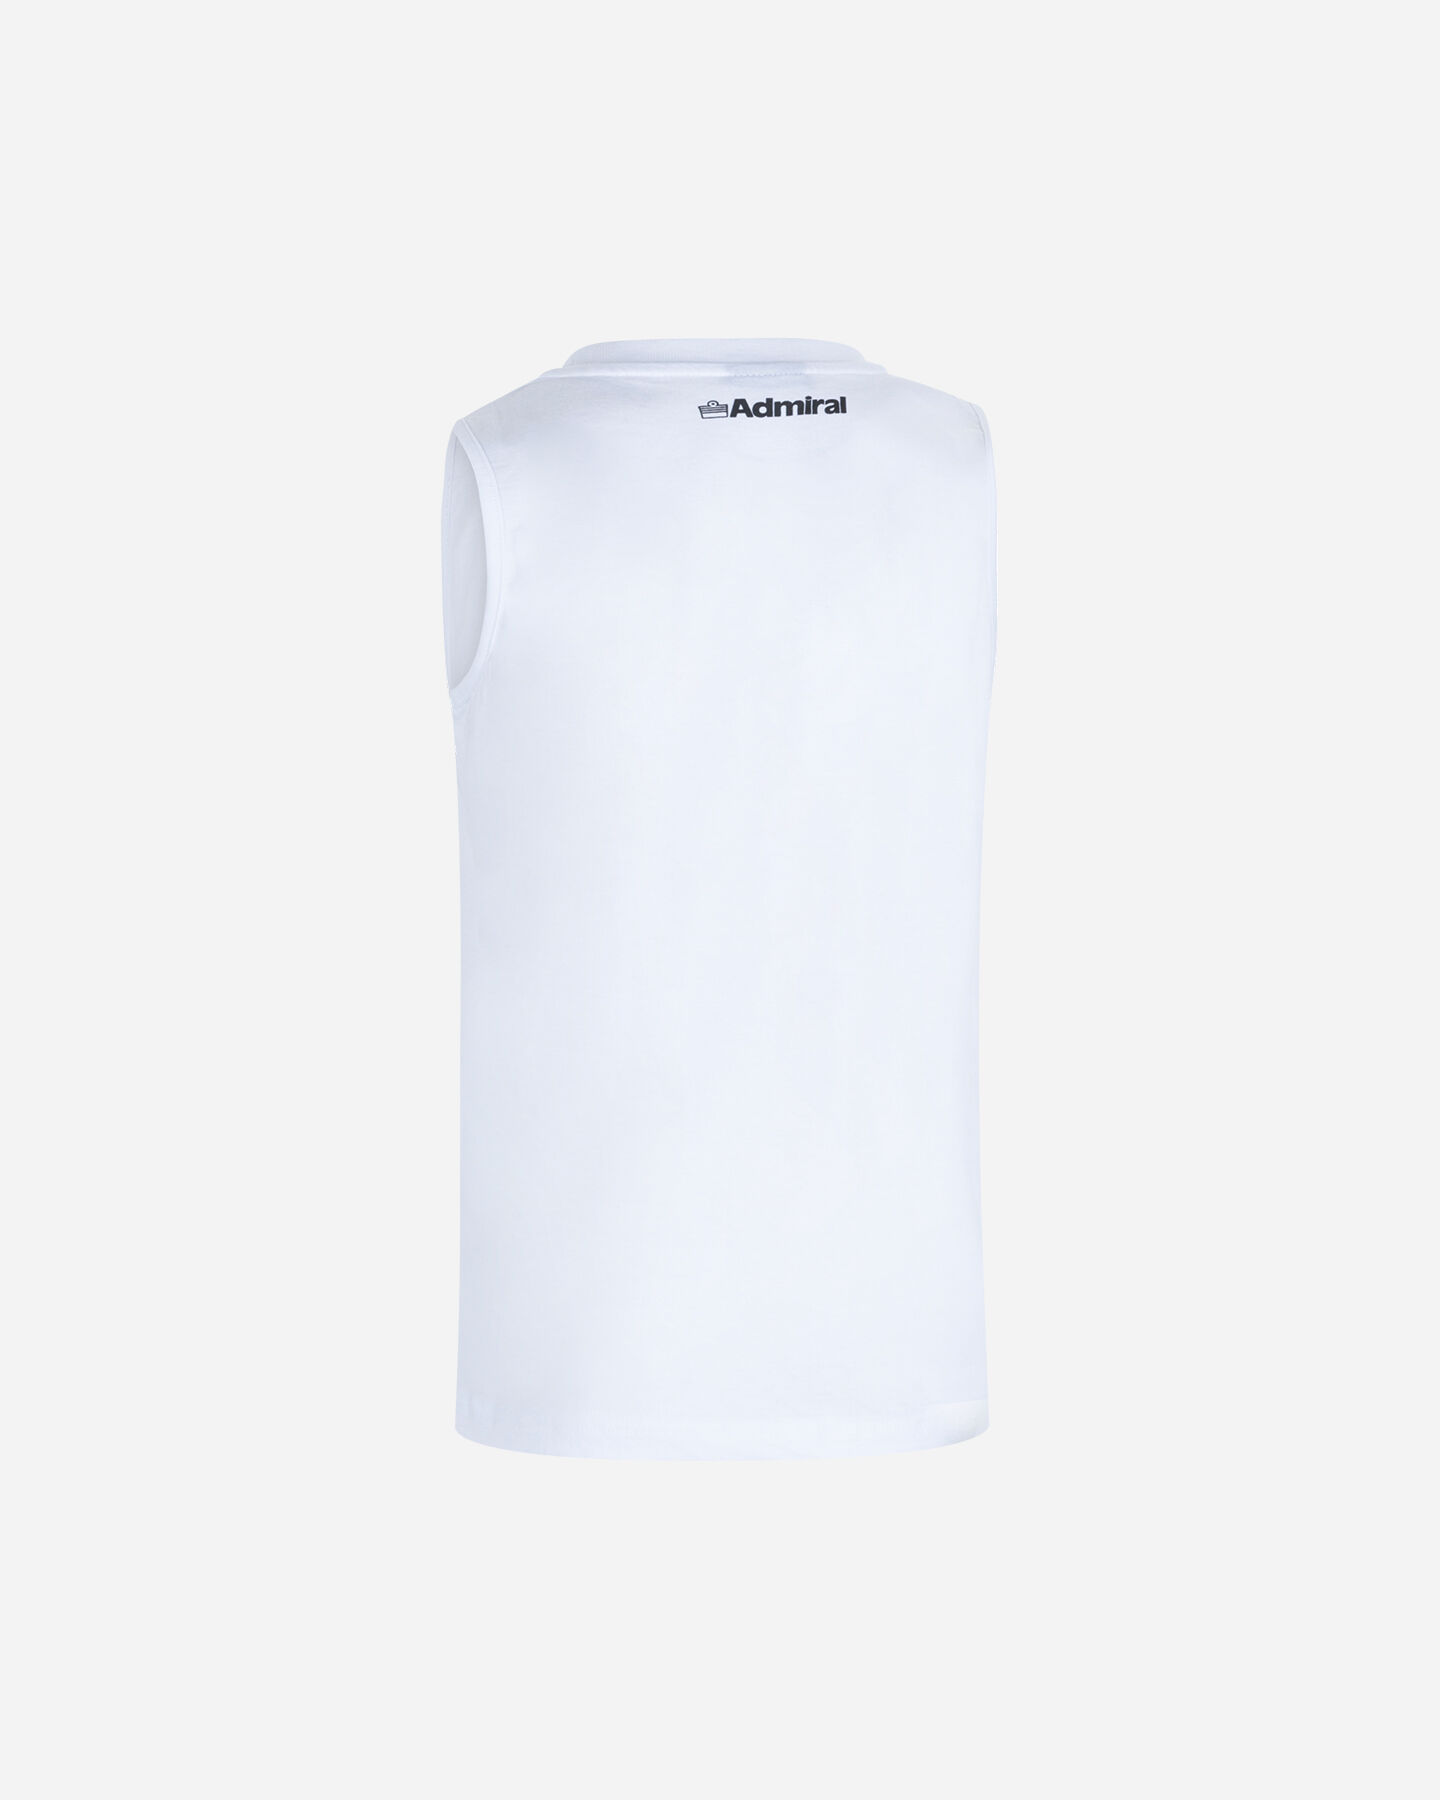  T-Shirt ADMIRAL RAINBOW LOGO JR S4121680|782|8A scatto 1